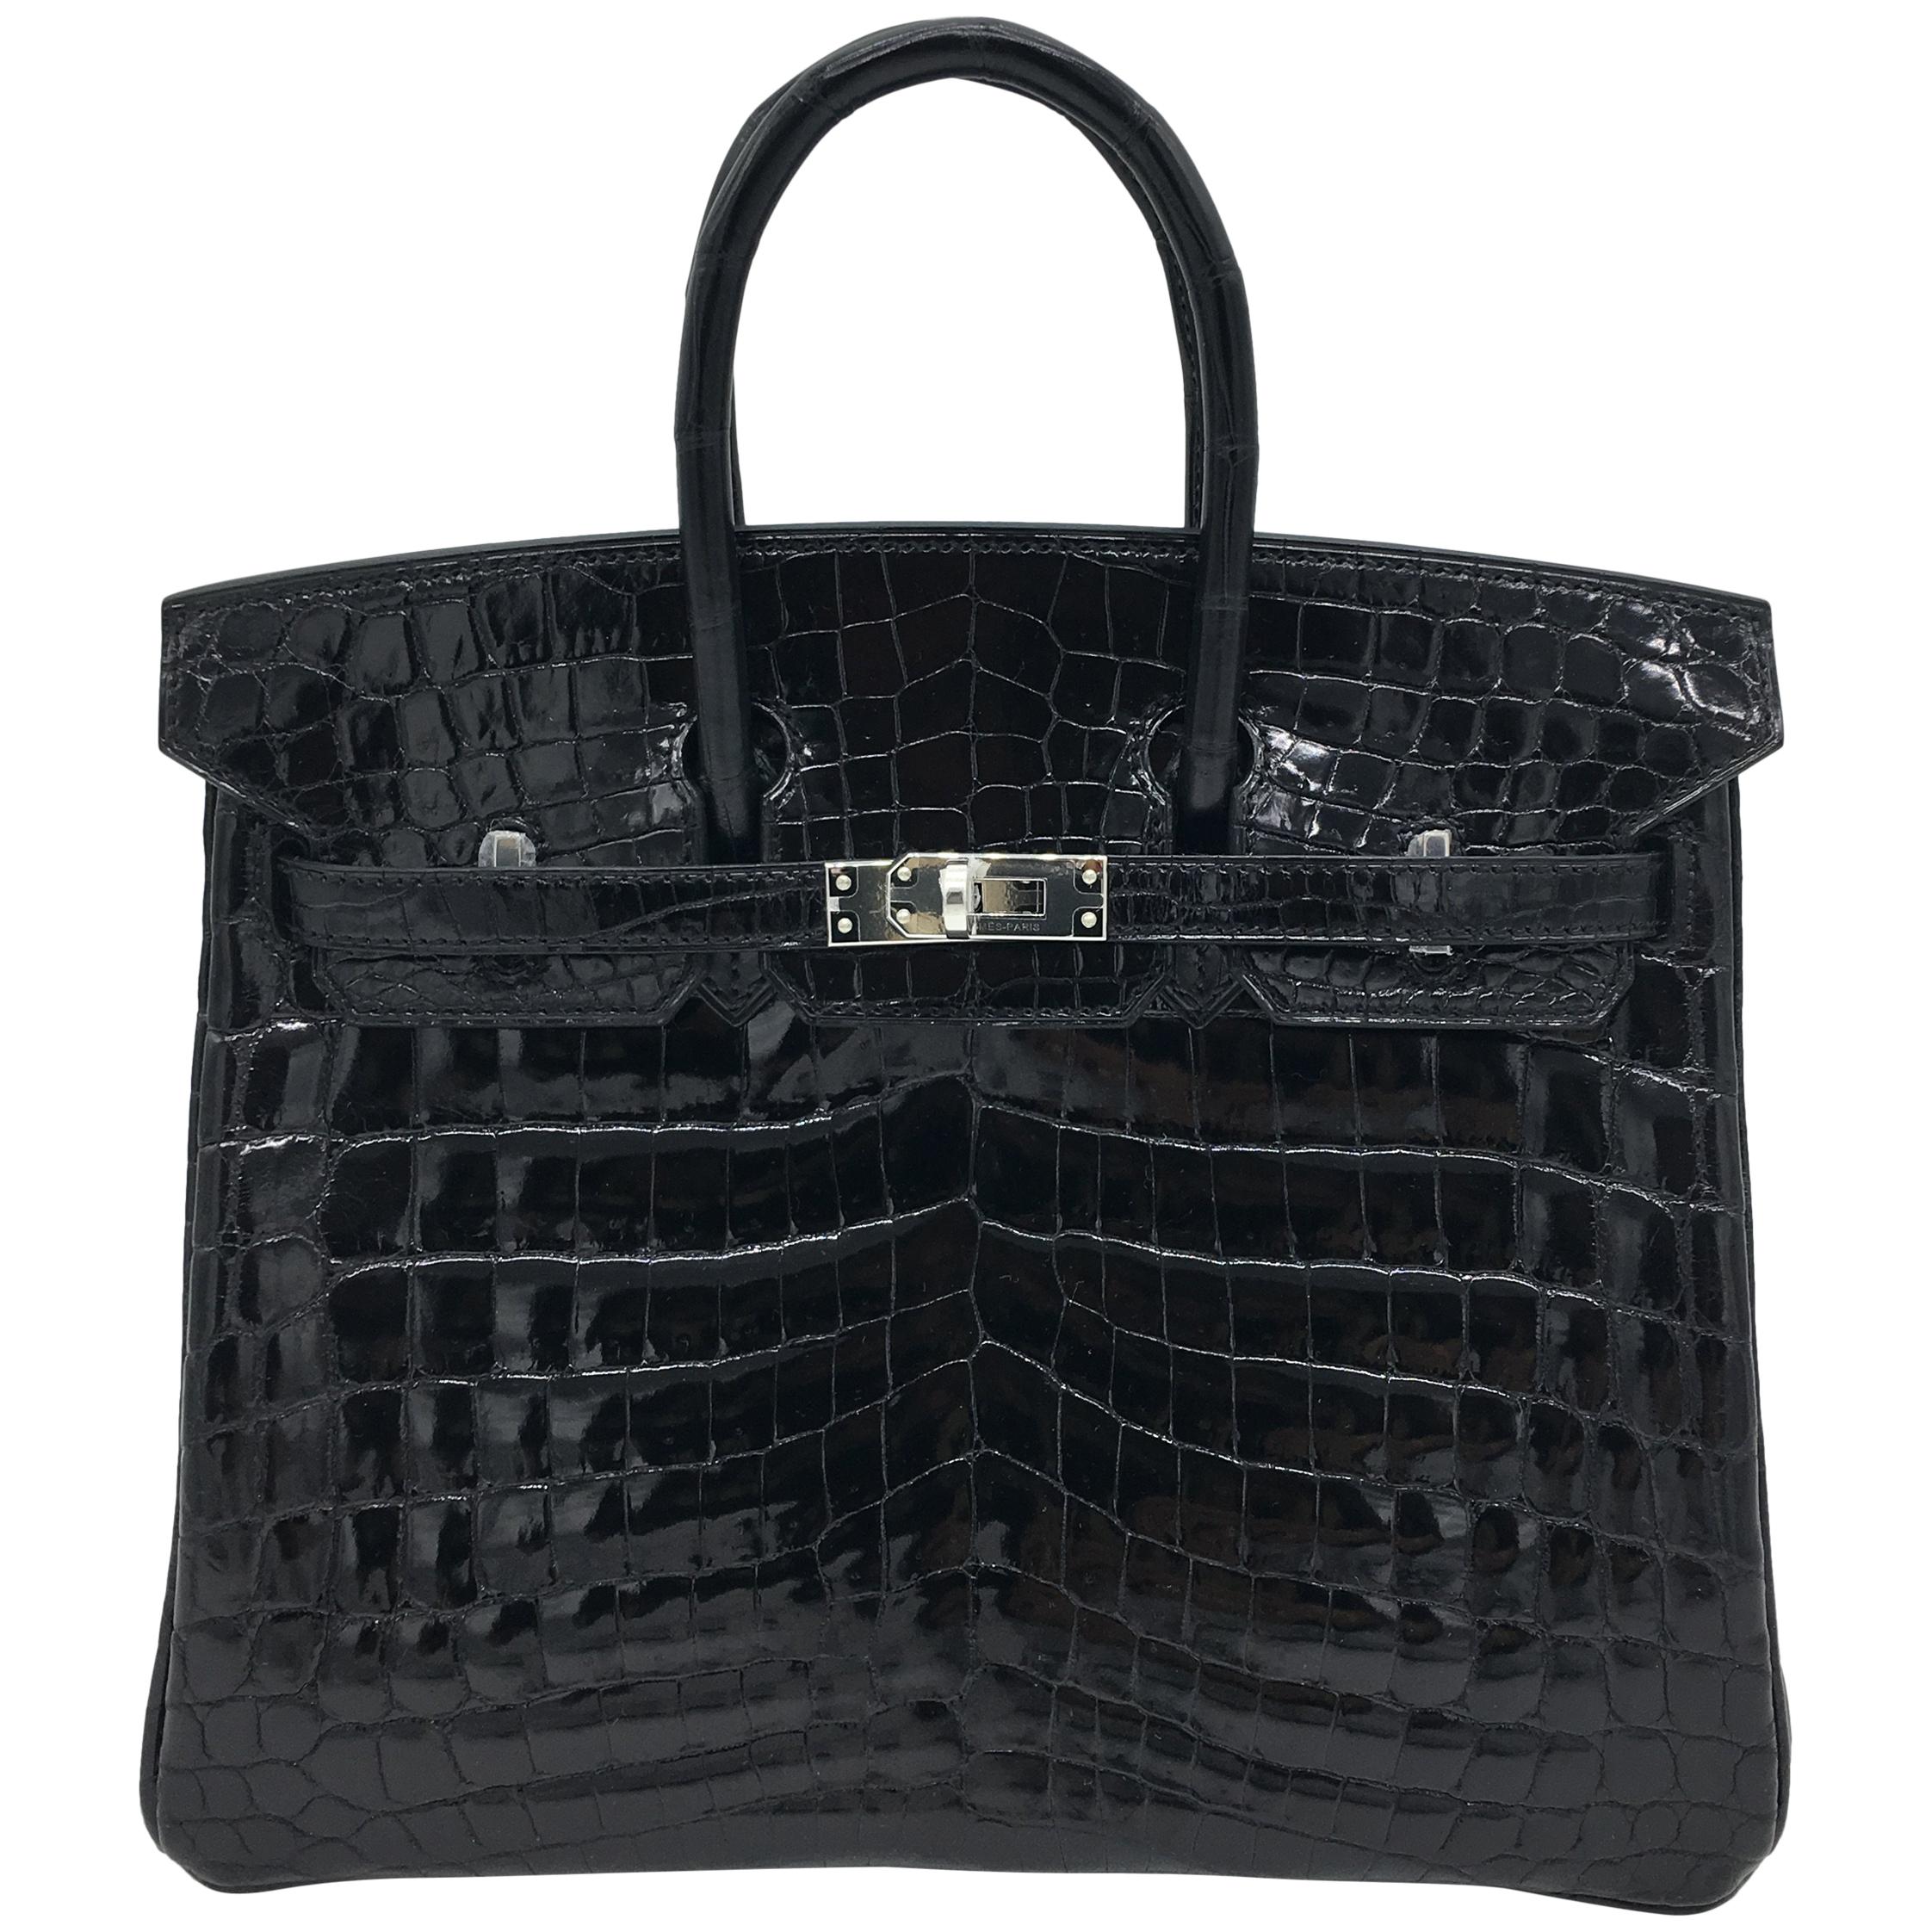 Hermes Black shiny crocodile Birkin 25cm Bag